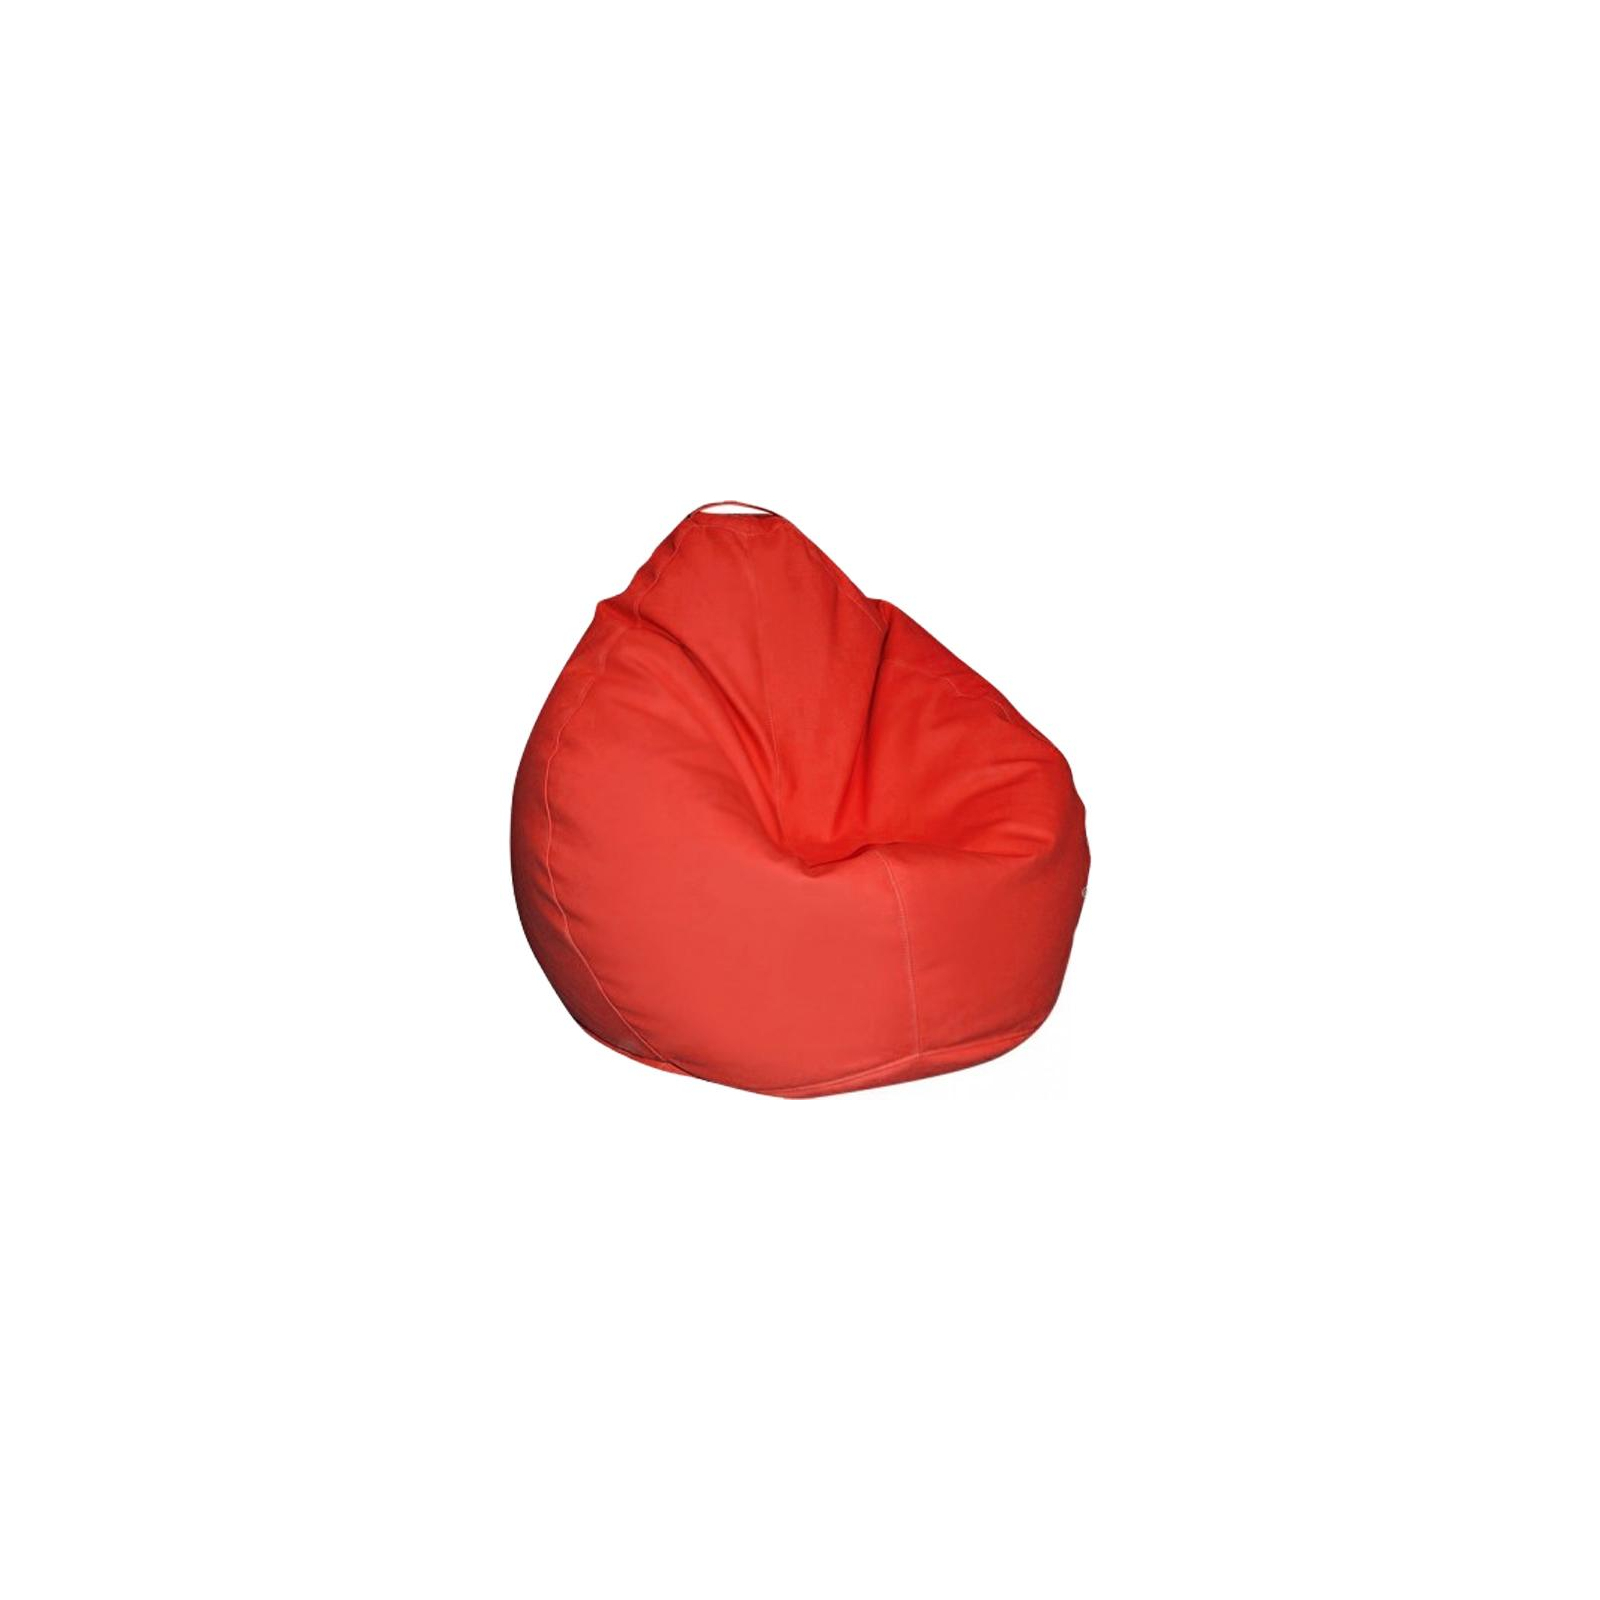 Кресло-мешок Примтекс плюс кресло-груша Tomber H-2210 M Red (Tomber H-2210 M Red)